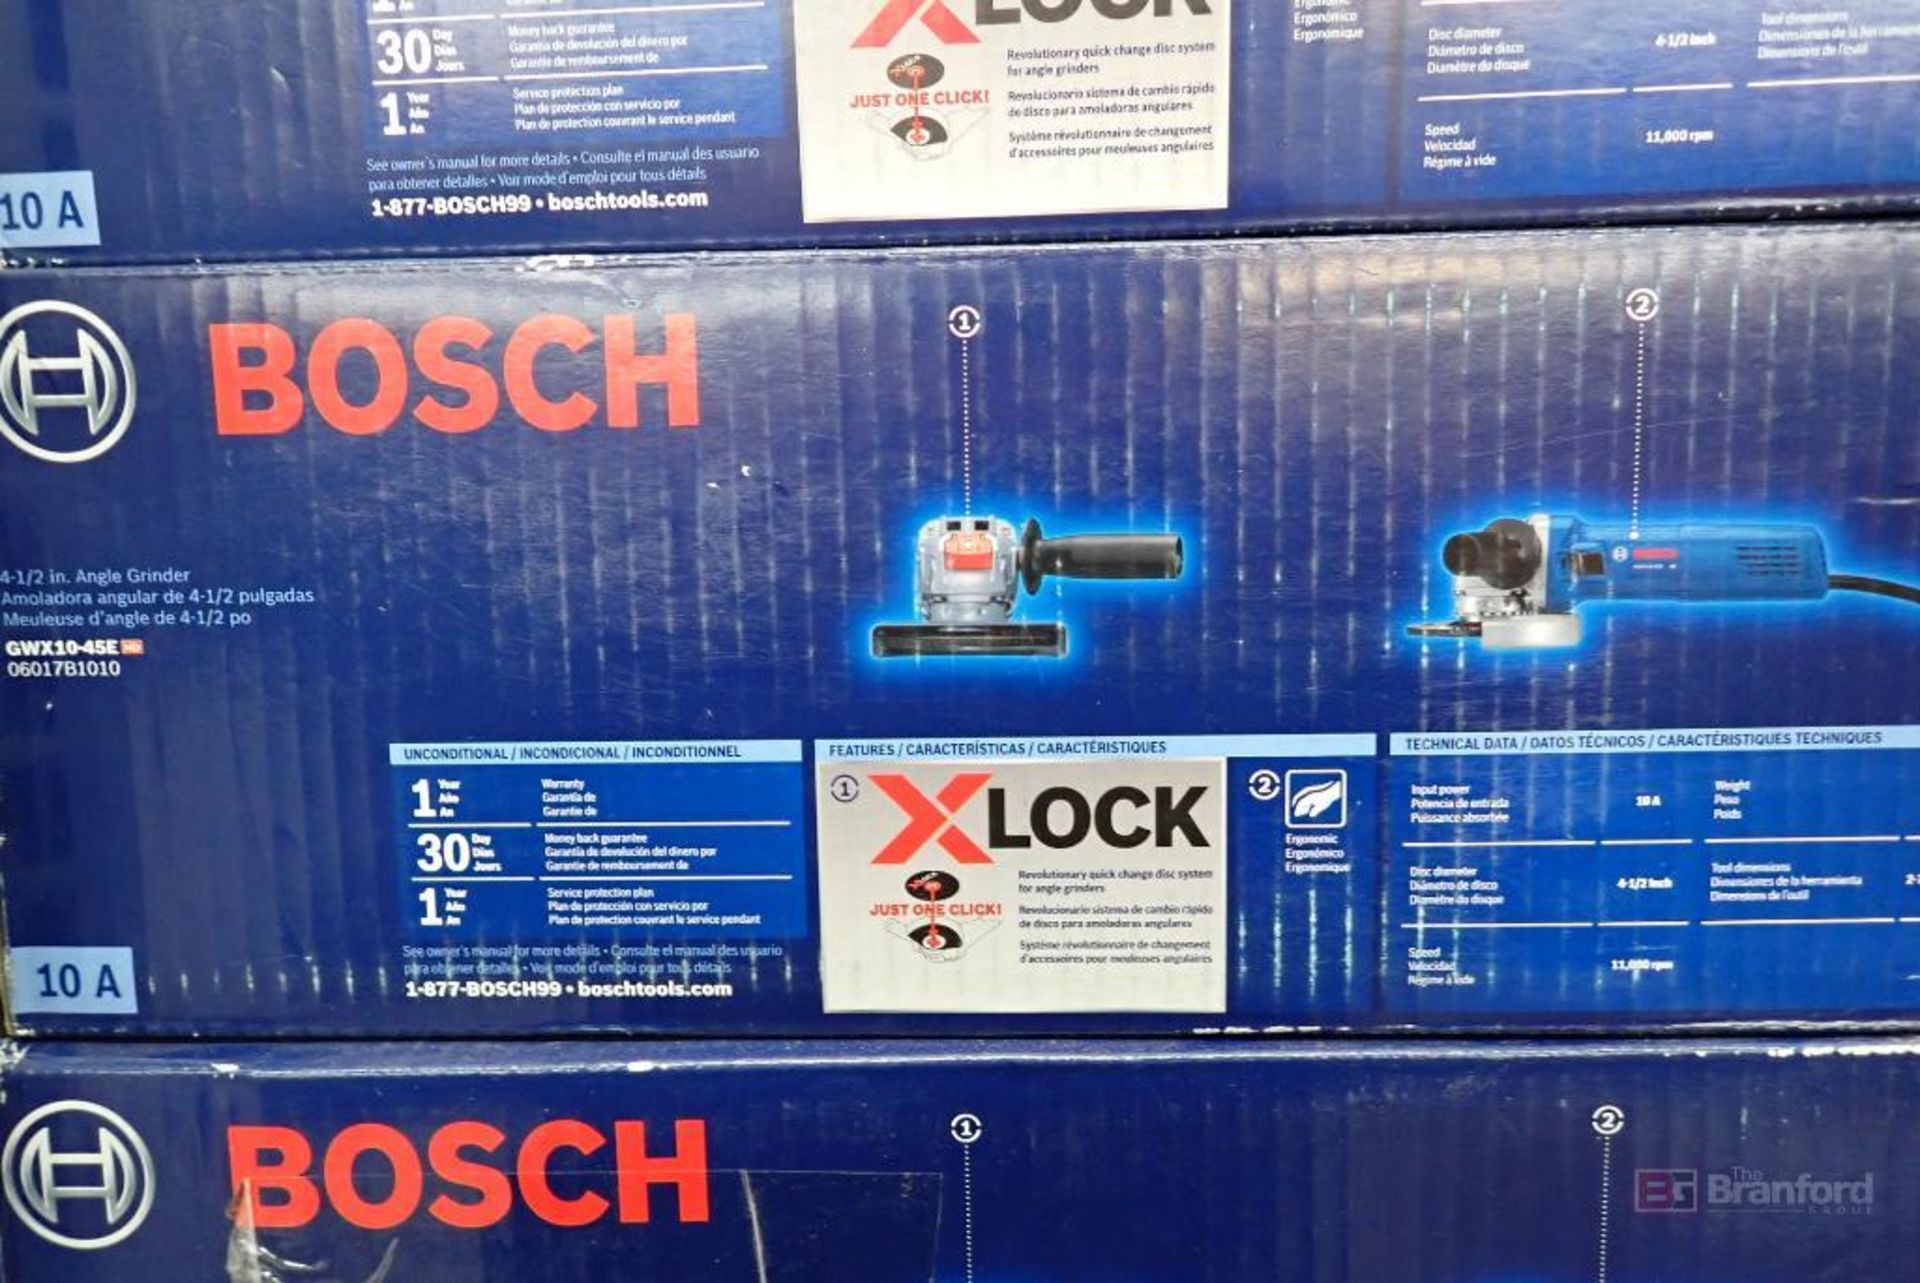 Bosch XLock GWX10-45 Angle Grinder - Image 2 of 4